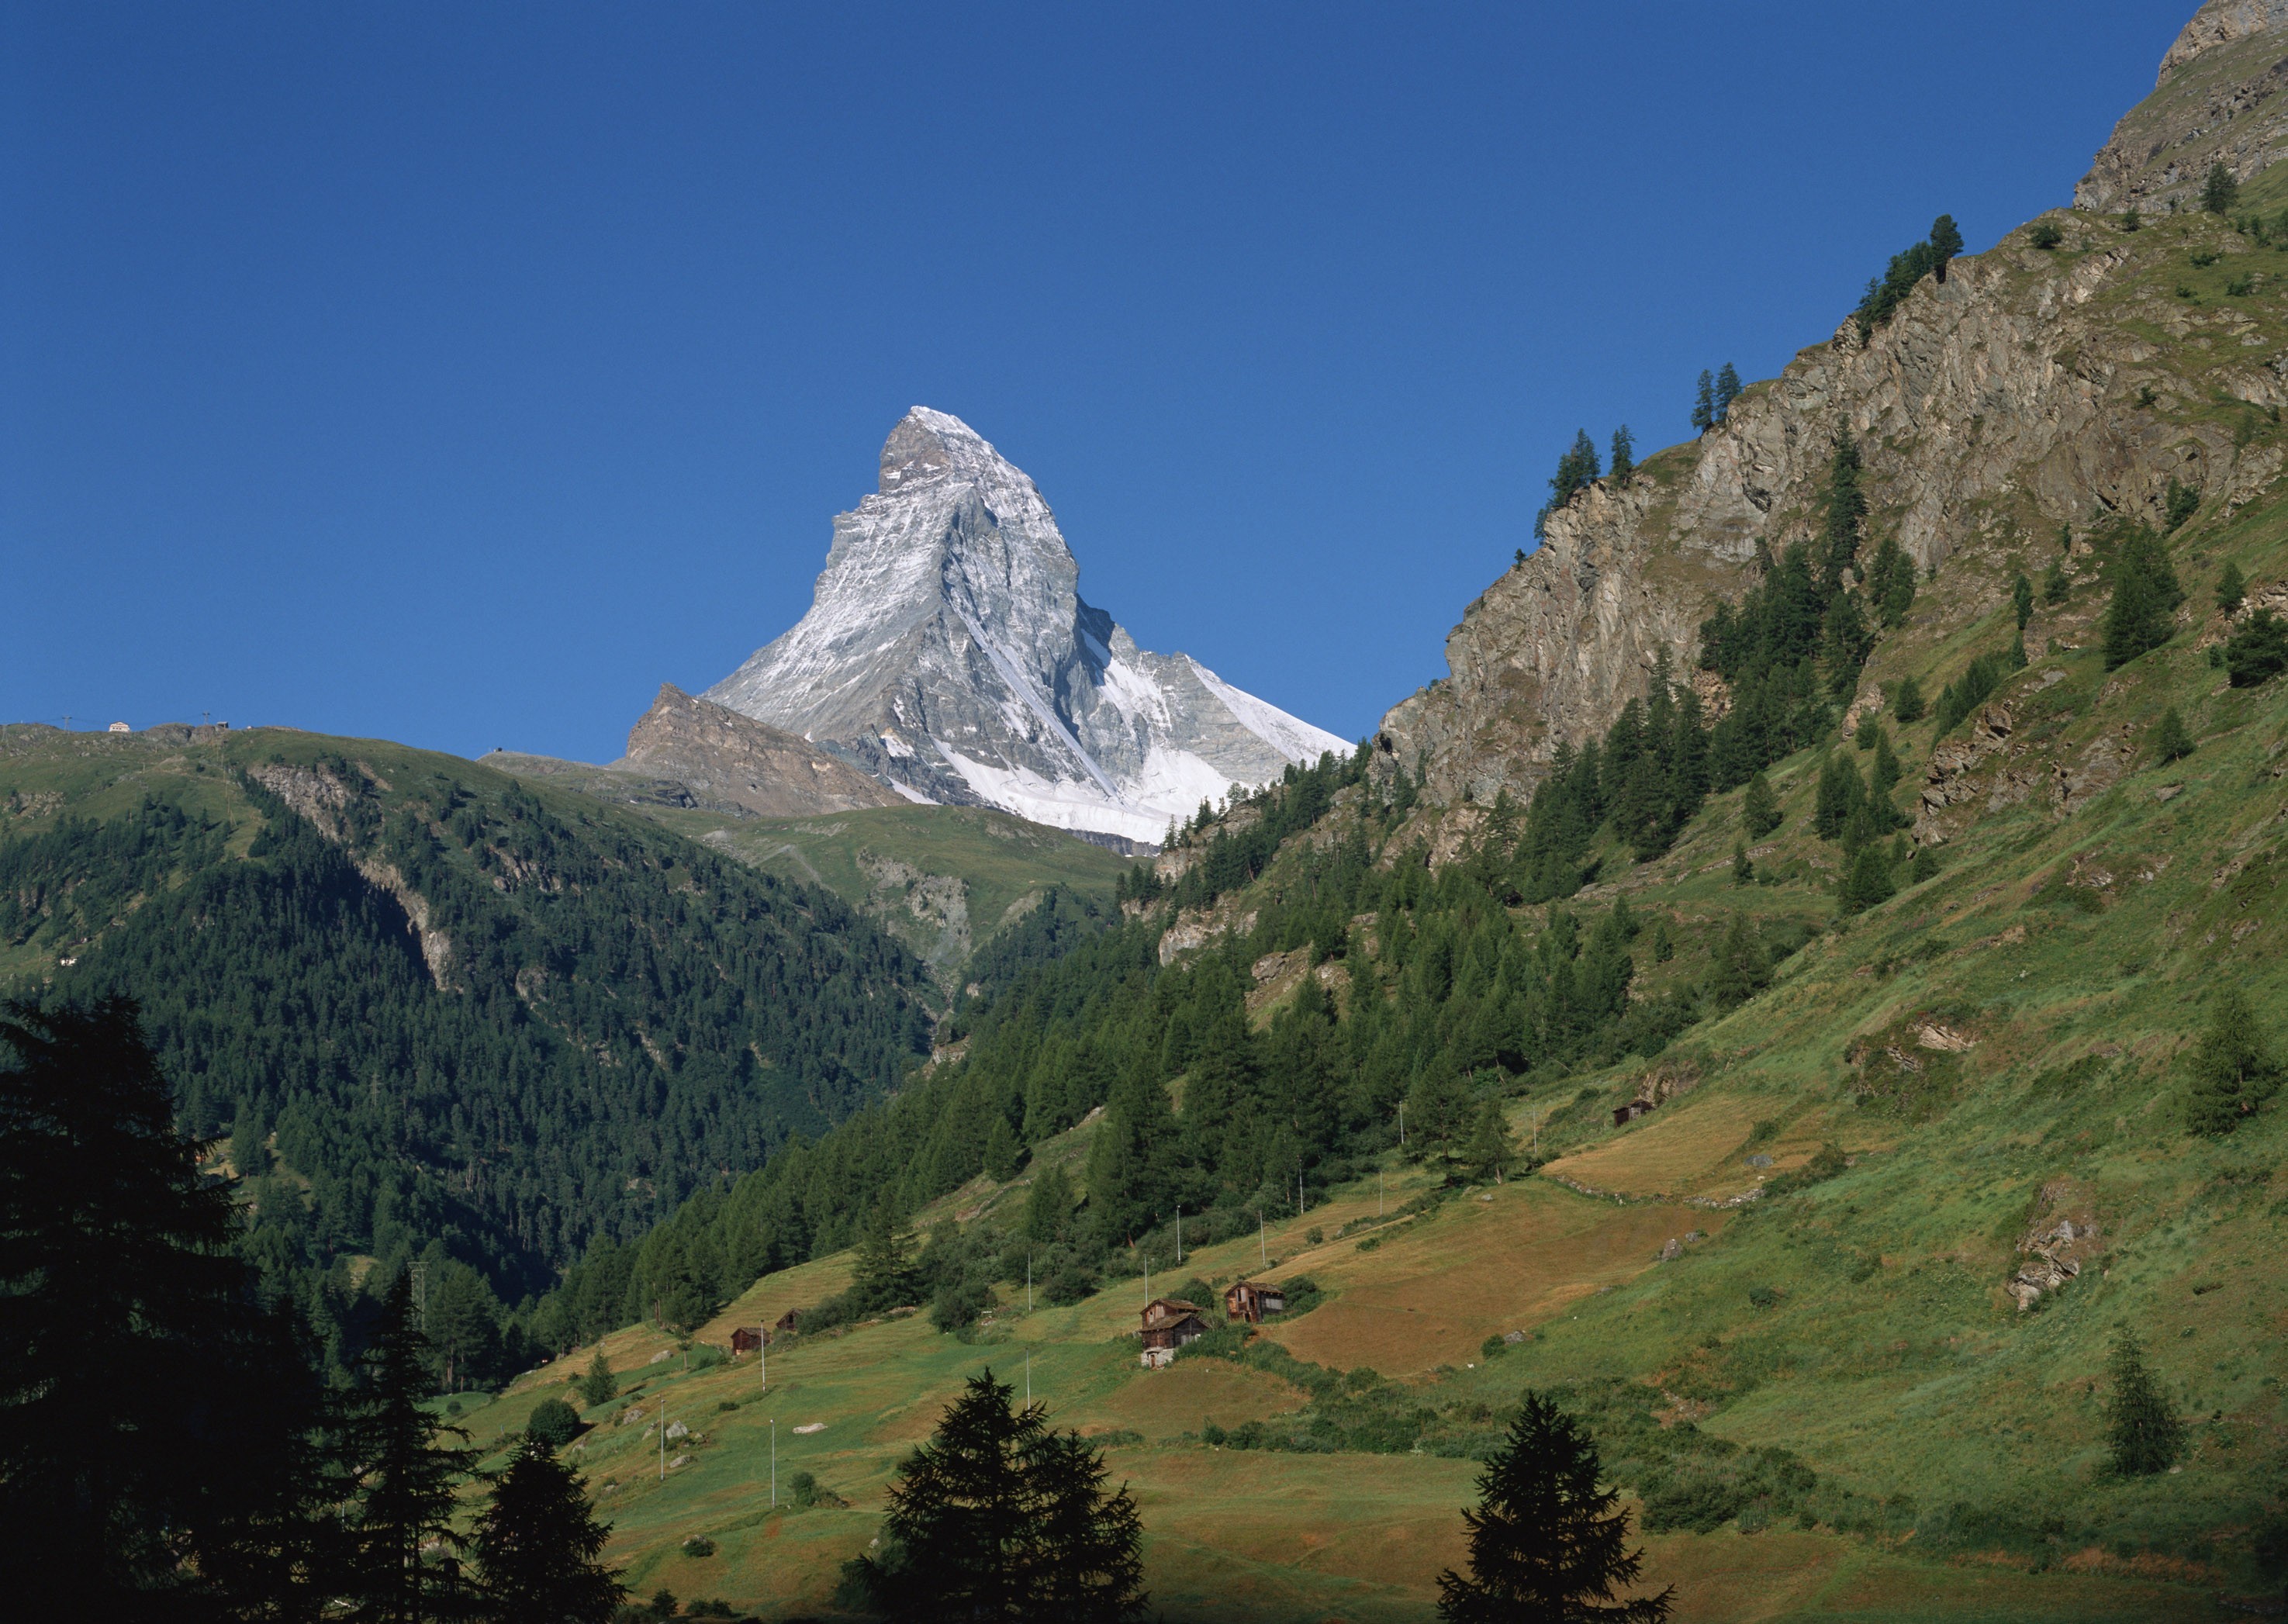 General 2950x2094 landscape Matterhorn mountains Alps nature snowy peak peak Switzerland